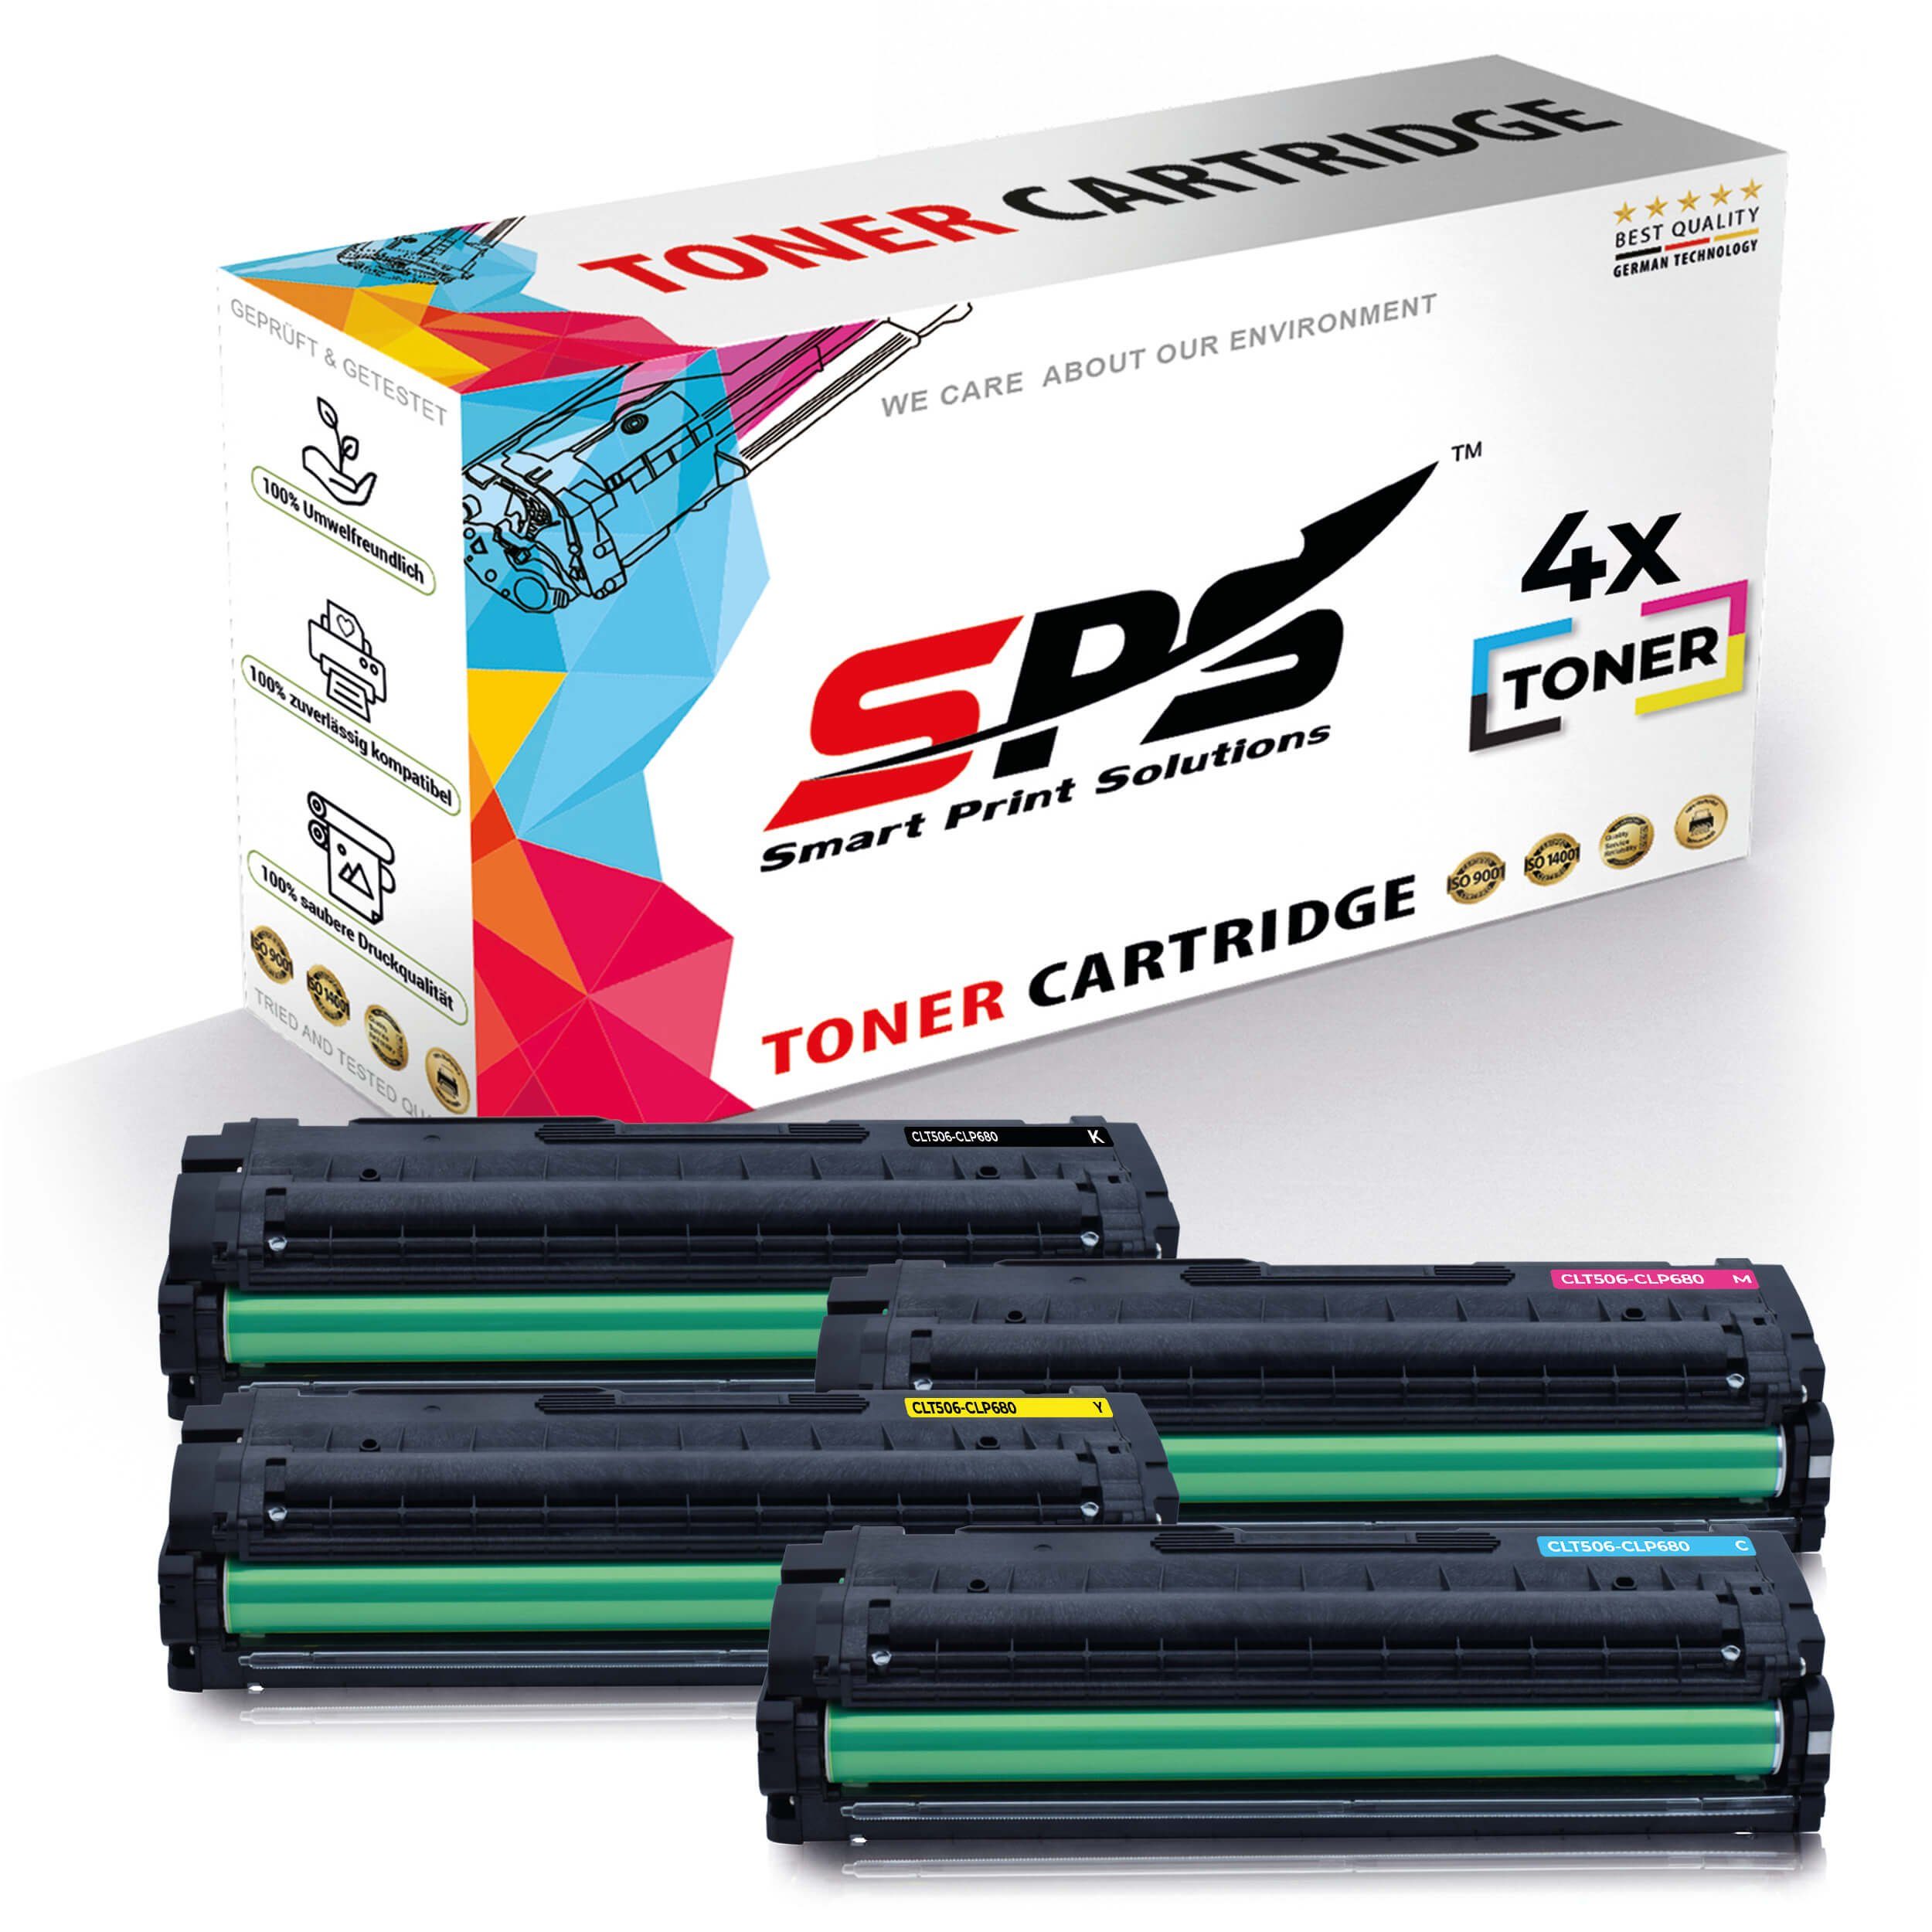 SPS Tonerkartusche 4x Multipack Set Kompatibel für Samsung CLX-6260, (4er Pack, 4x Toner)